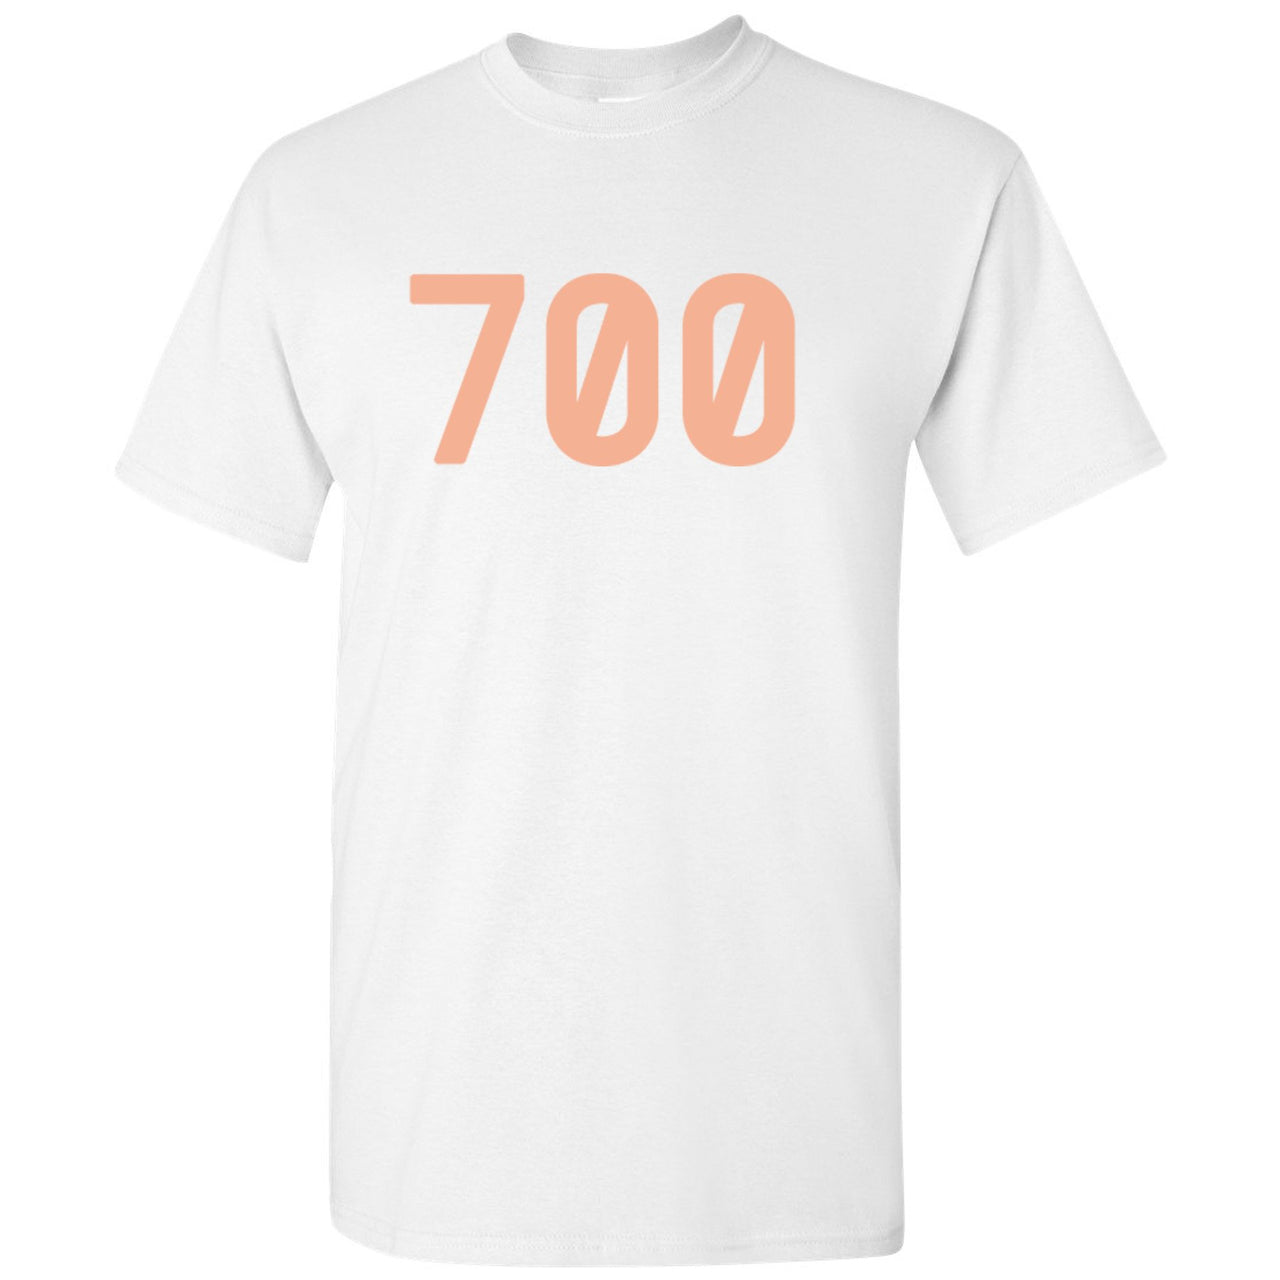 Inertia 700s T Shirt | 700, White